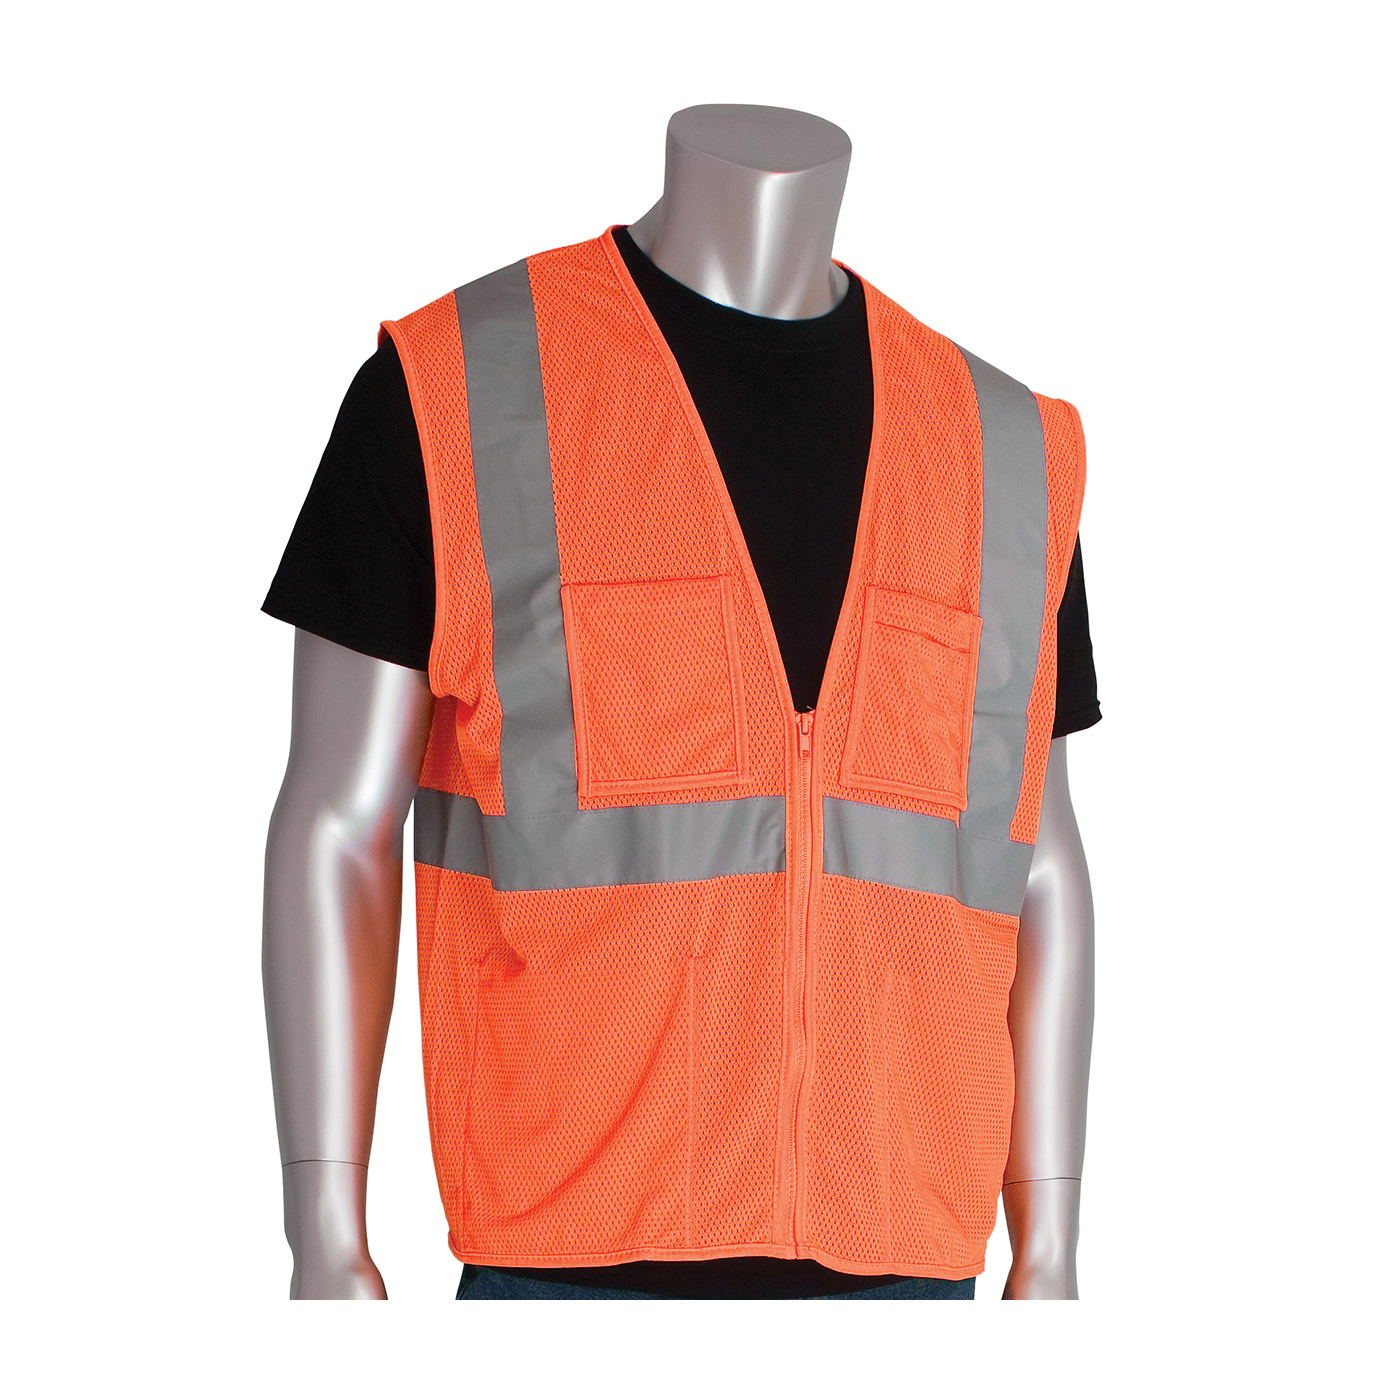 PIP® 302-MVGZ4POR-S Safety Vest, S, Hi-Viz Orange, Polyester Mesh, Zipper Closure, 4 Pockets, ANSI Class: Class 2, Specifications Met: ANSI 107 Type R